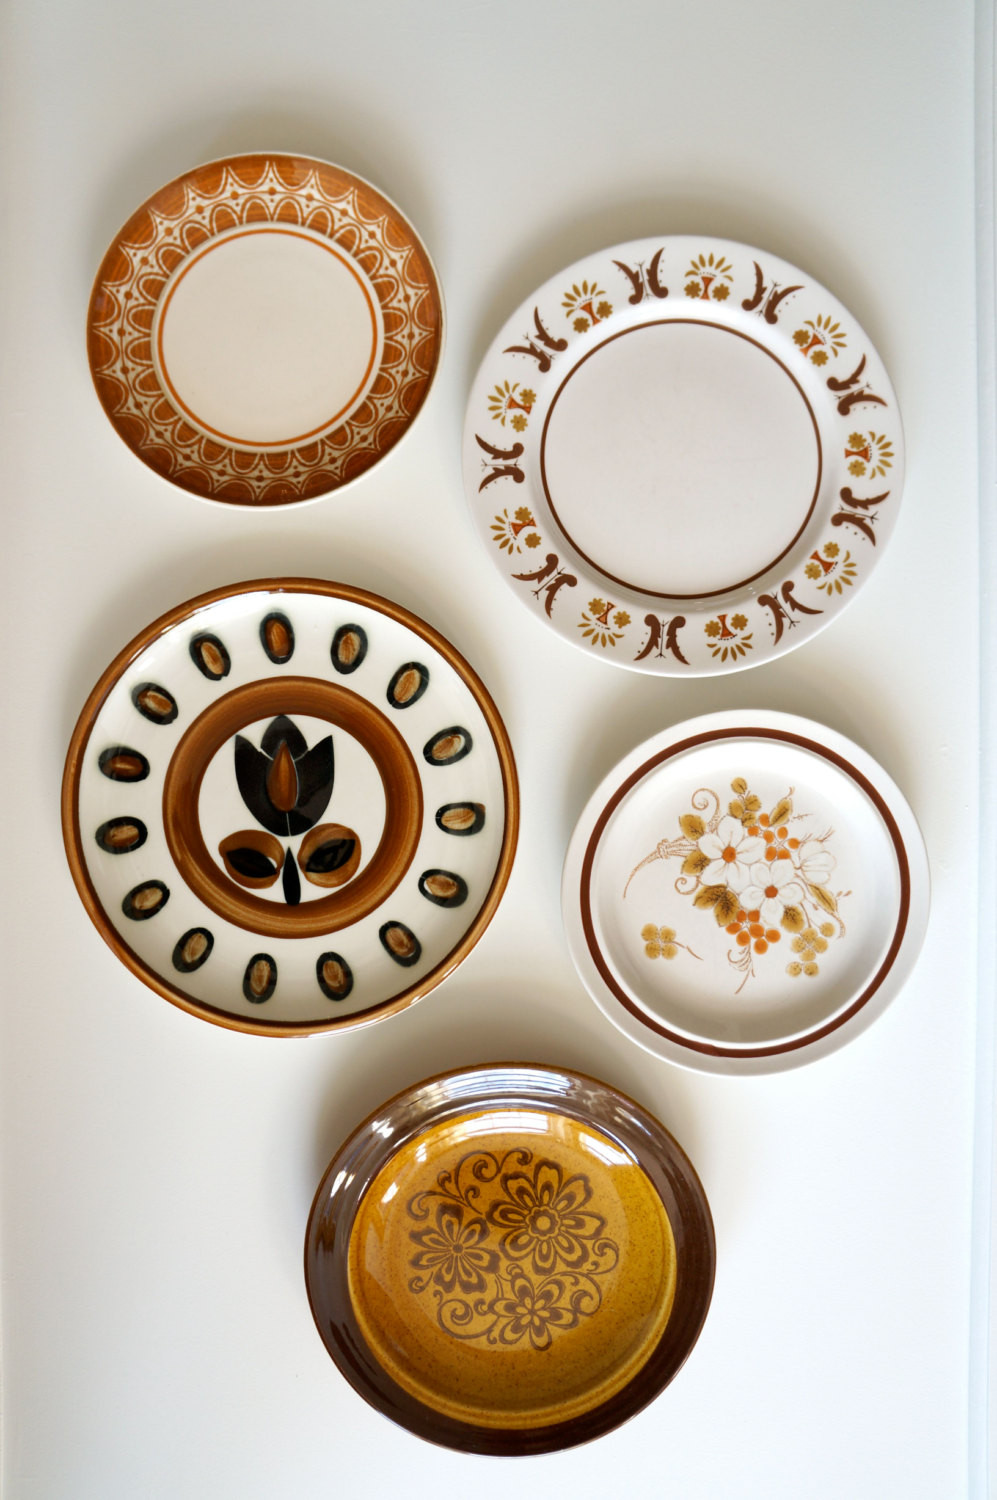 Decorative Plates For Kitchen Wall
 Decorative Plates Kitchen Wall Decor Shabby Chic Home Decor